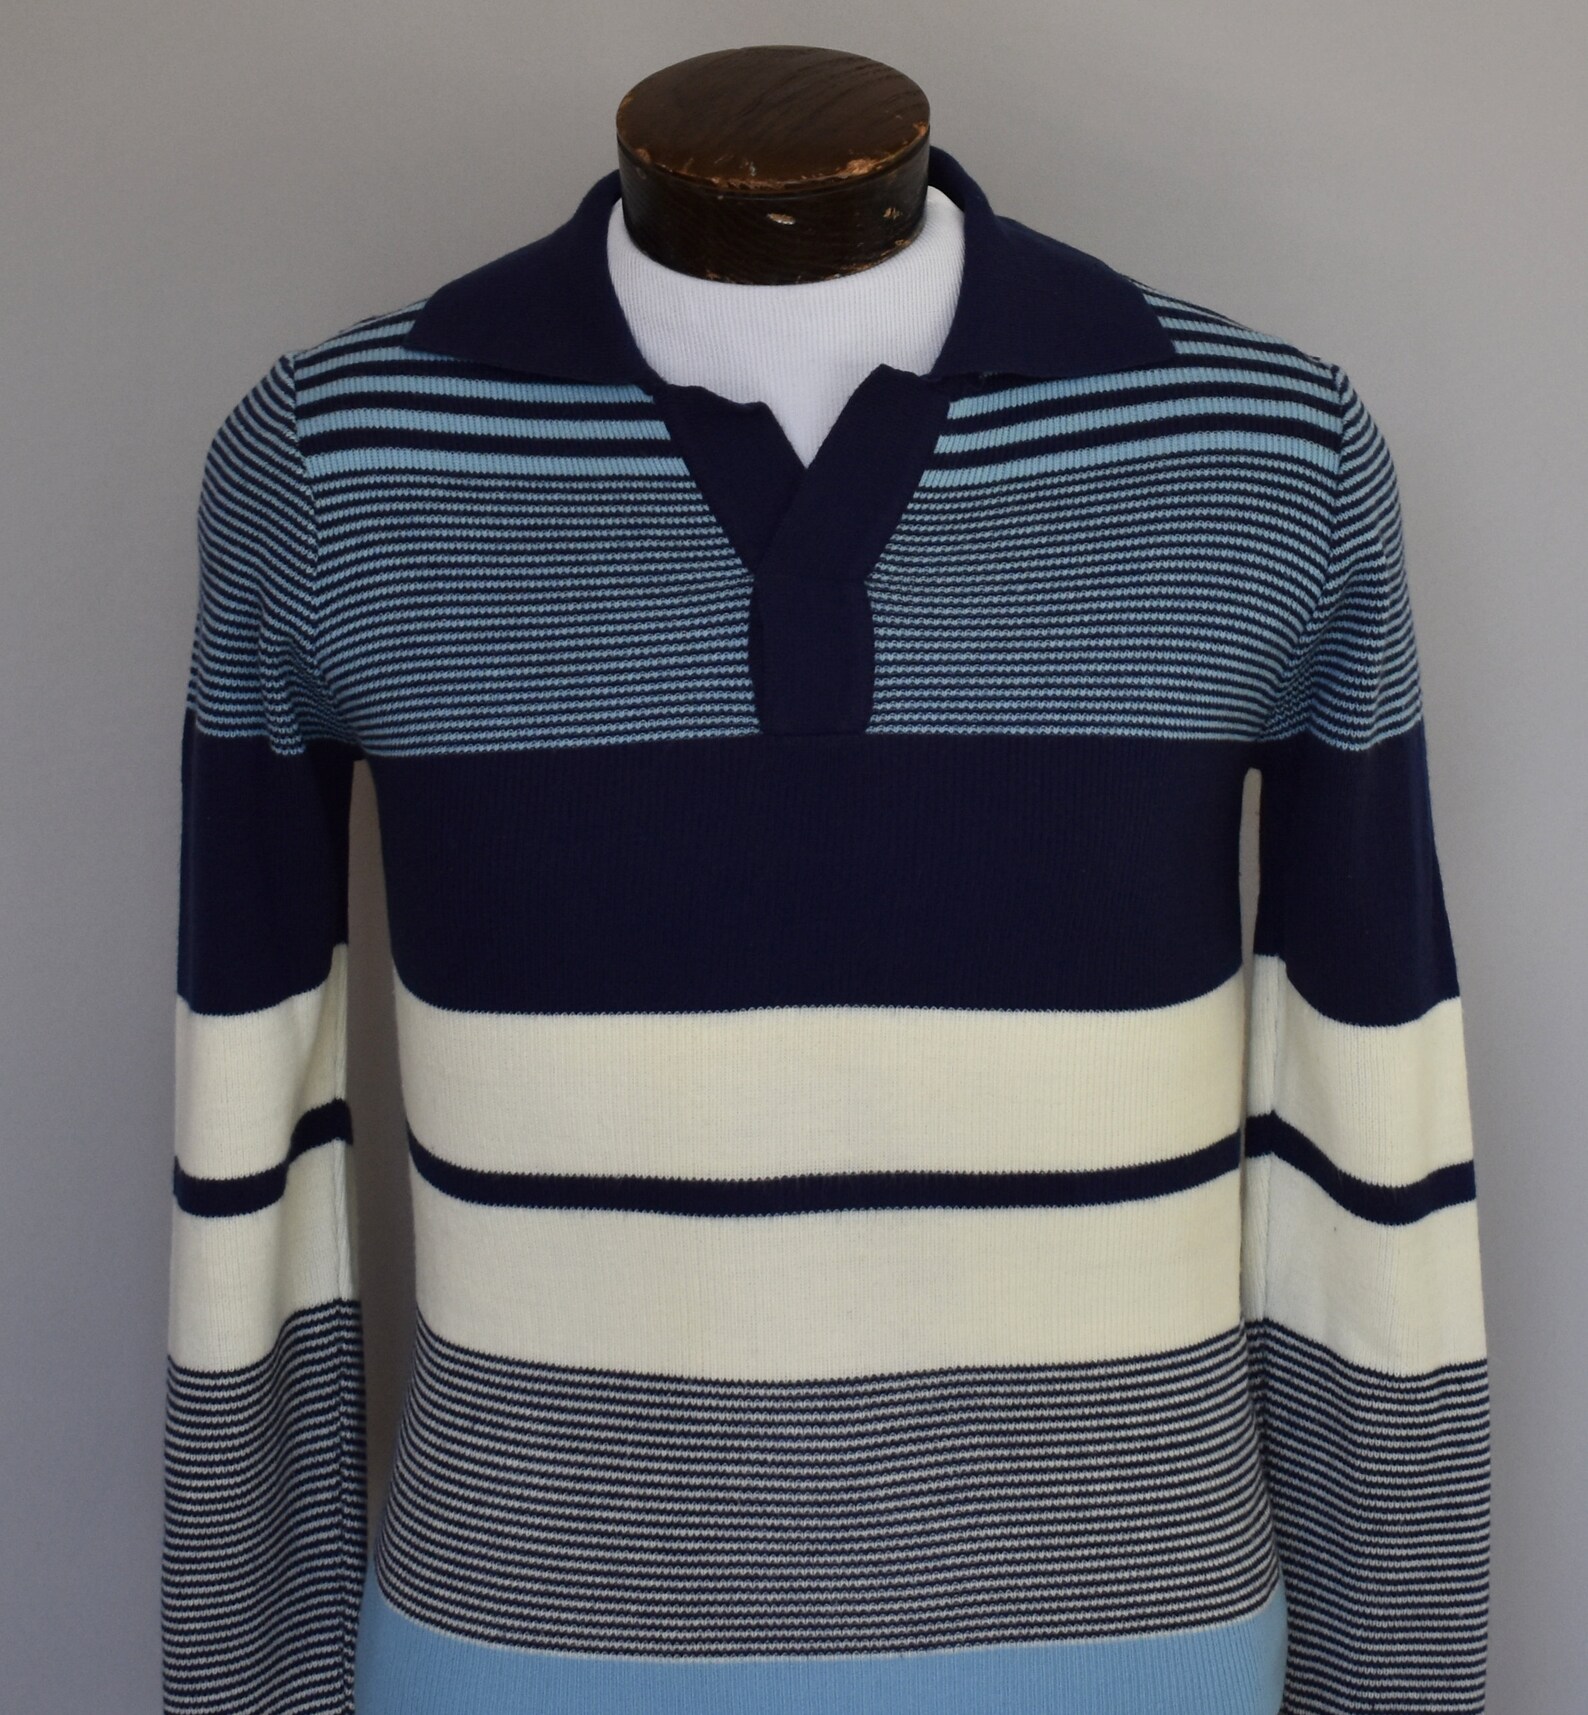 Long Sleeve Striped Shirt 70s Johnny Collar V-Neck Sweater | Etsy